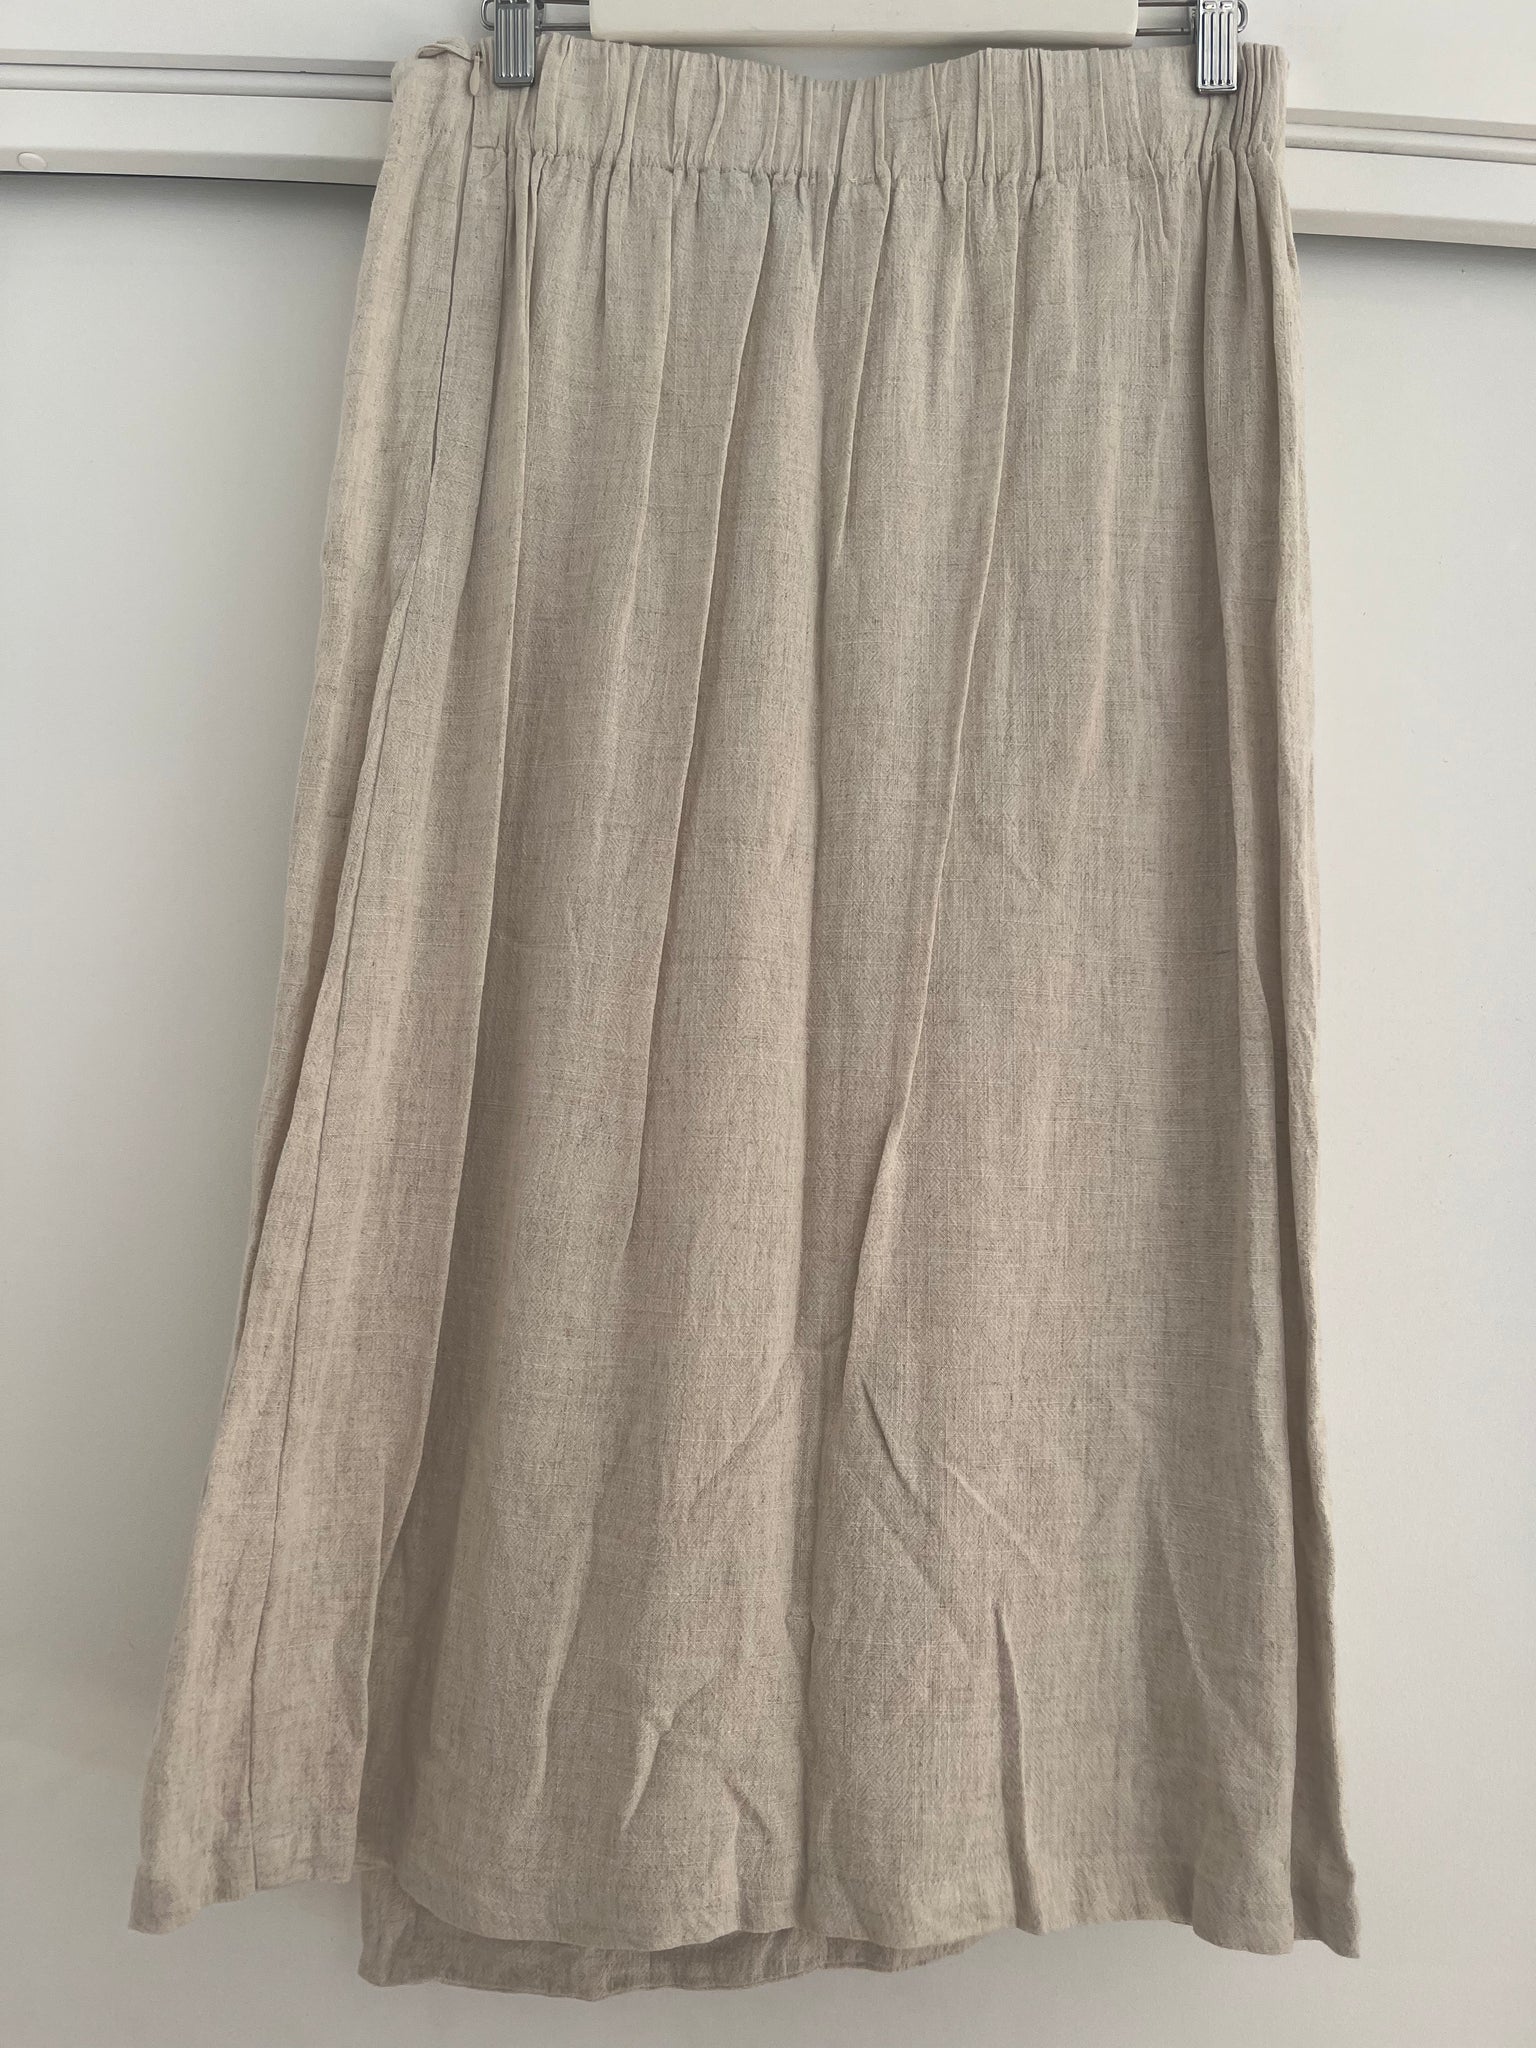 Vintage Mirabelle Linen Skirt - Medium